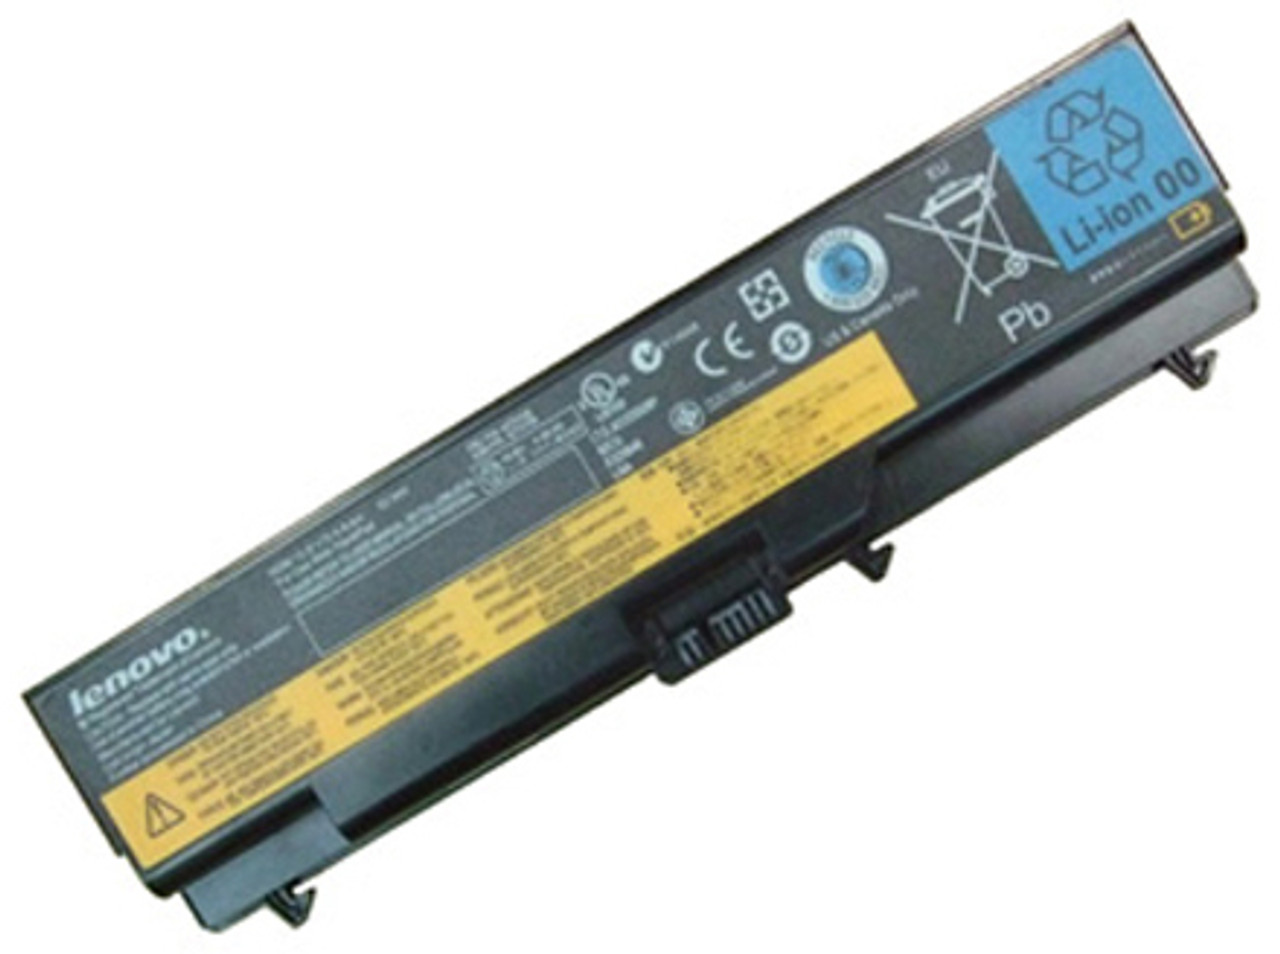 42T4911 - Lenovo 10.8 V DC 5.2AH 6 Cell Li-Ion HIGH PERFORMANCE Battery for ThinkPad